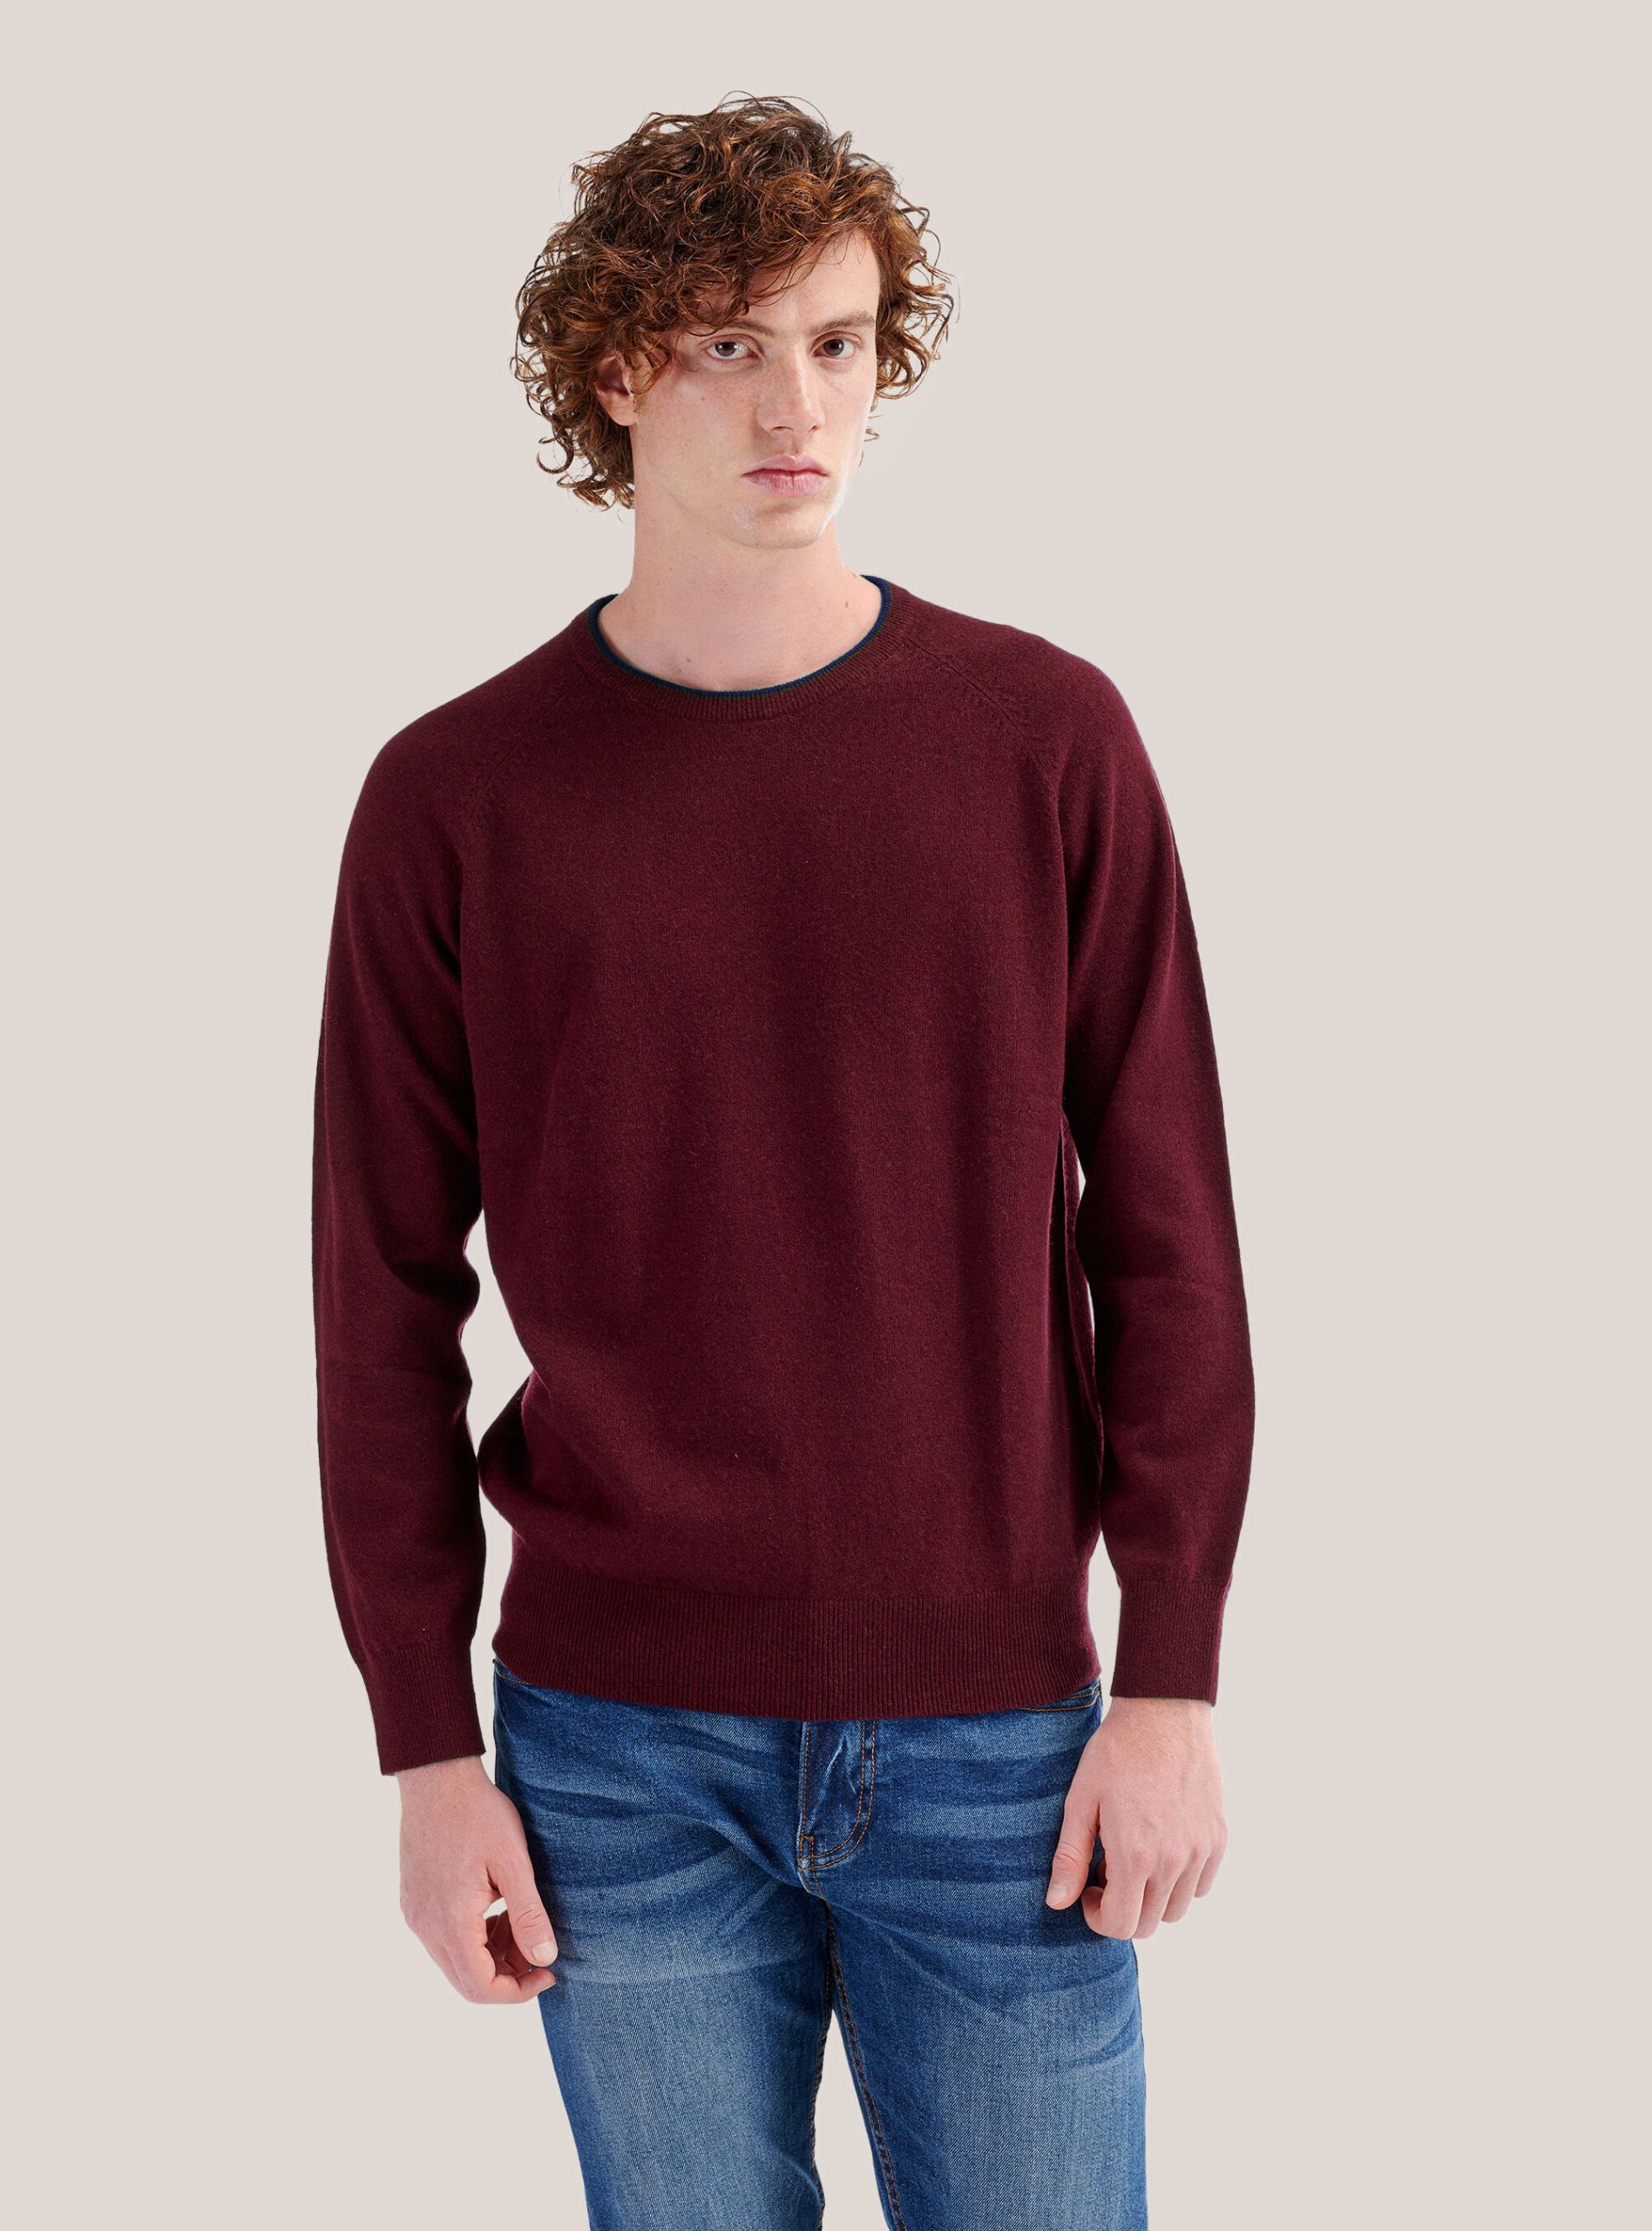 Round Neck Sweater With Contrasting Border Norm Alcott C3307 Wine Strickwaren Männer – 2